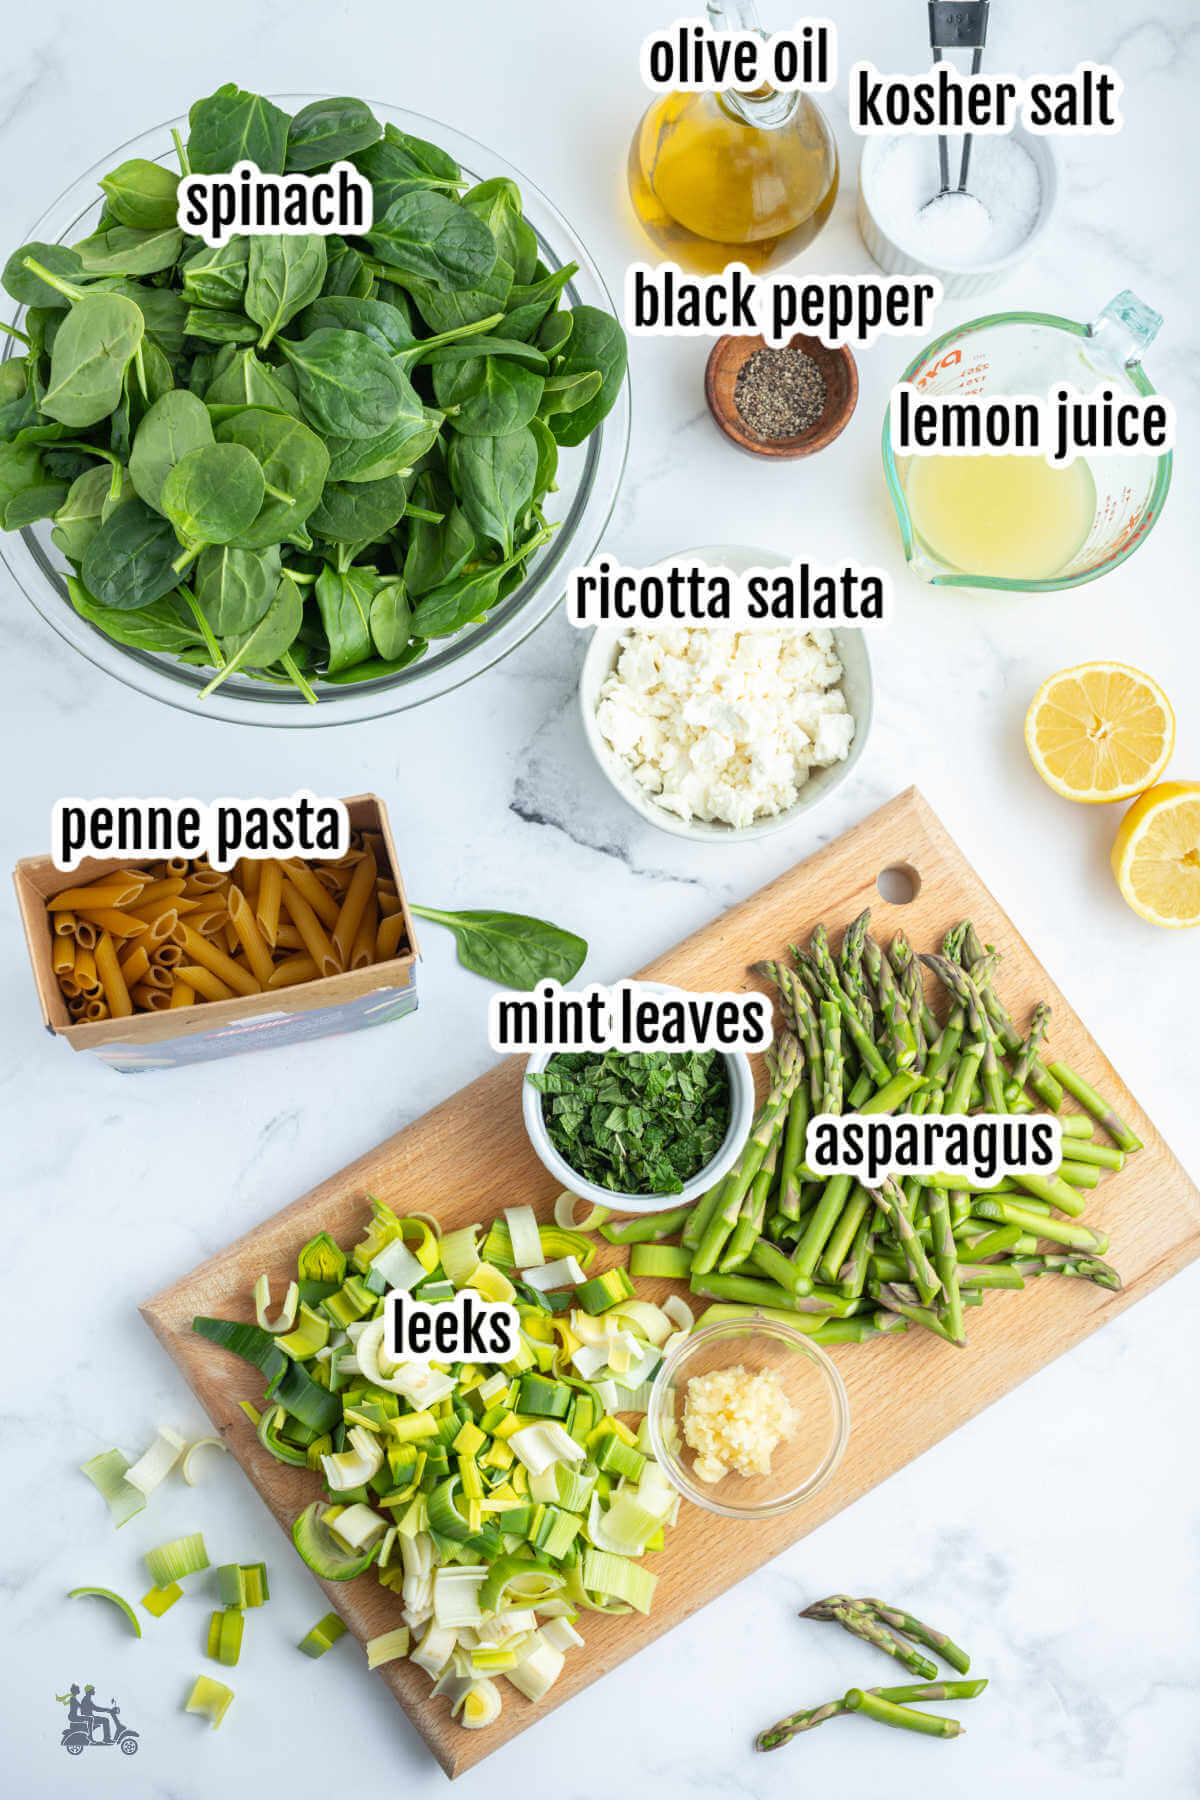 Image of the ingredients needed to make the Pasta Primavera recipe. 